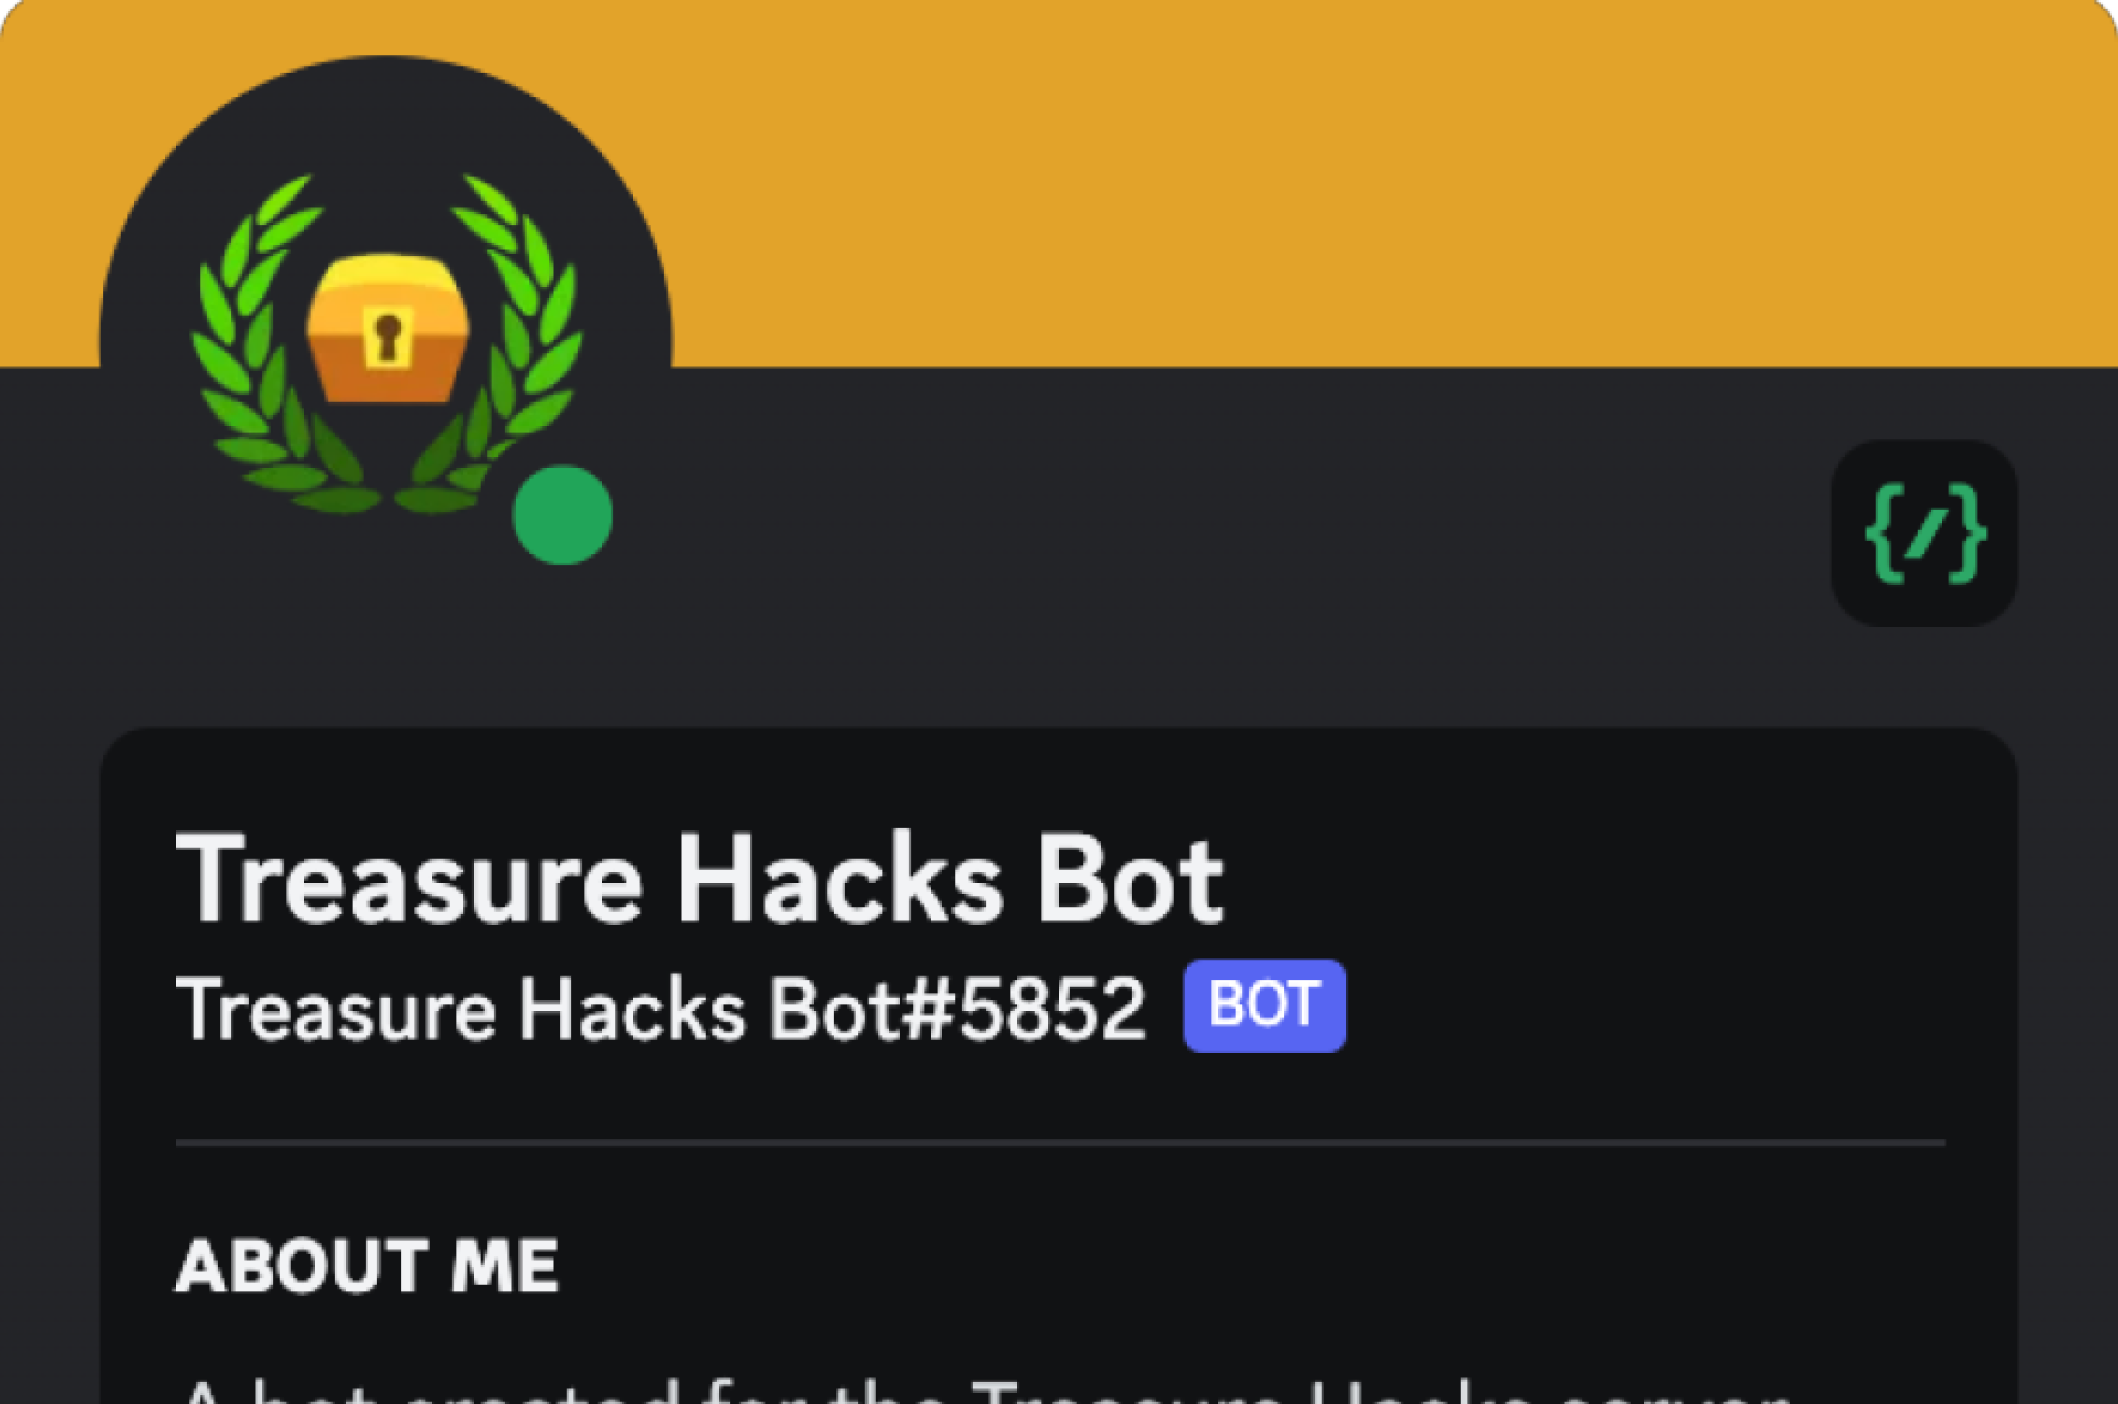 User profile of the Treasure Hacks Discord Bot